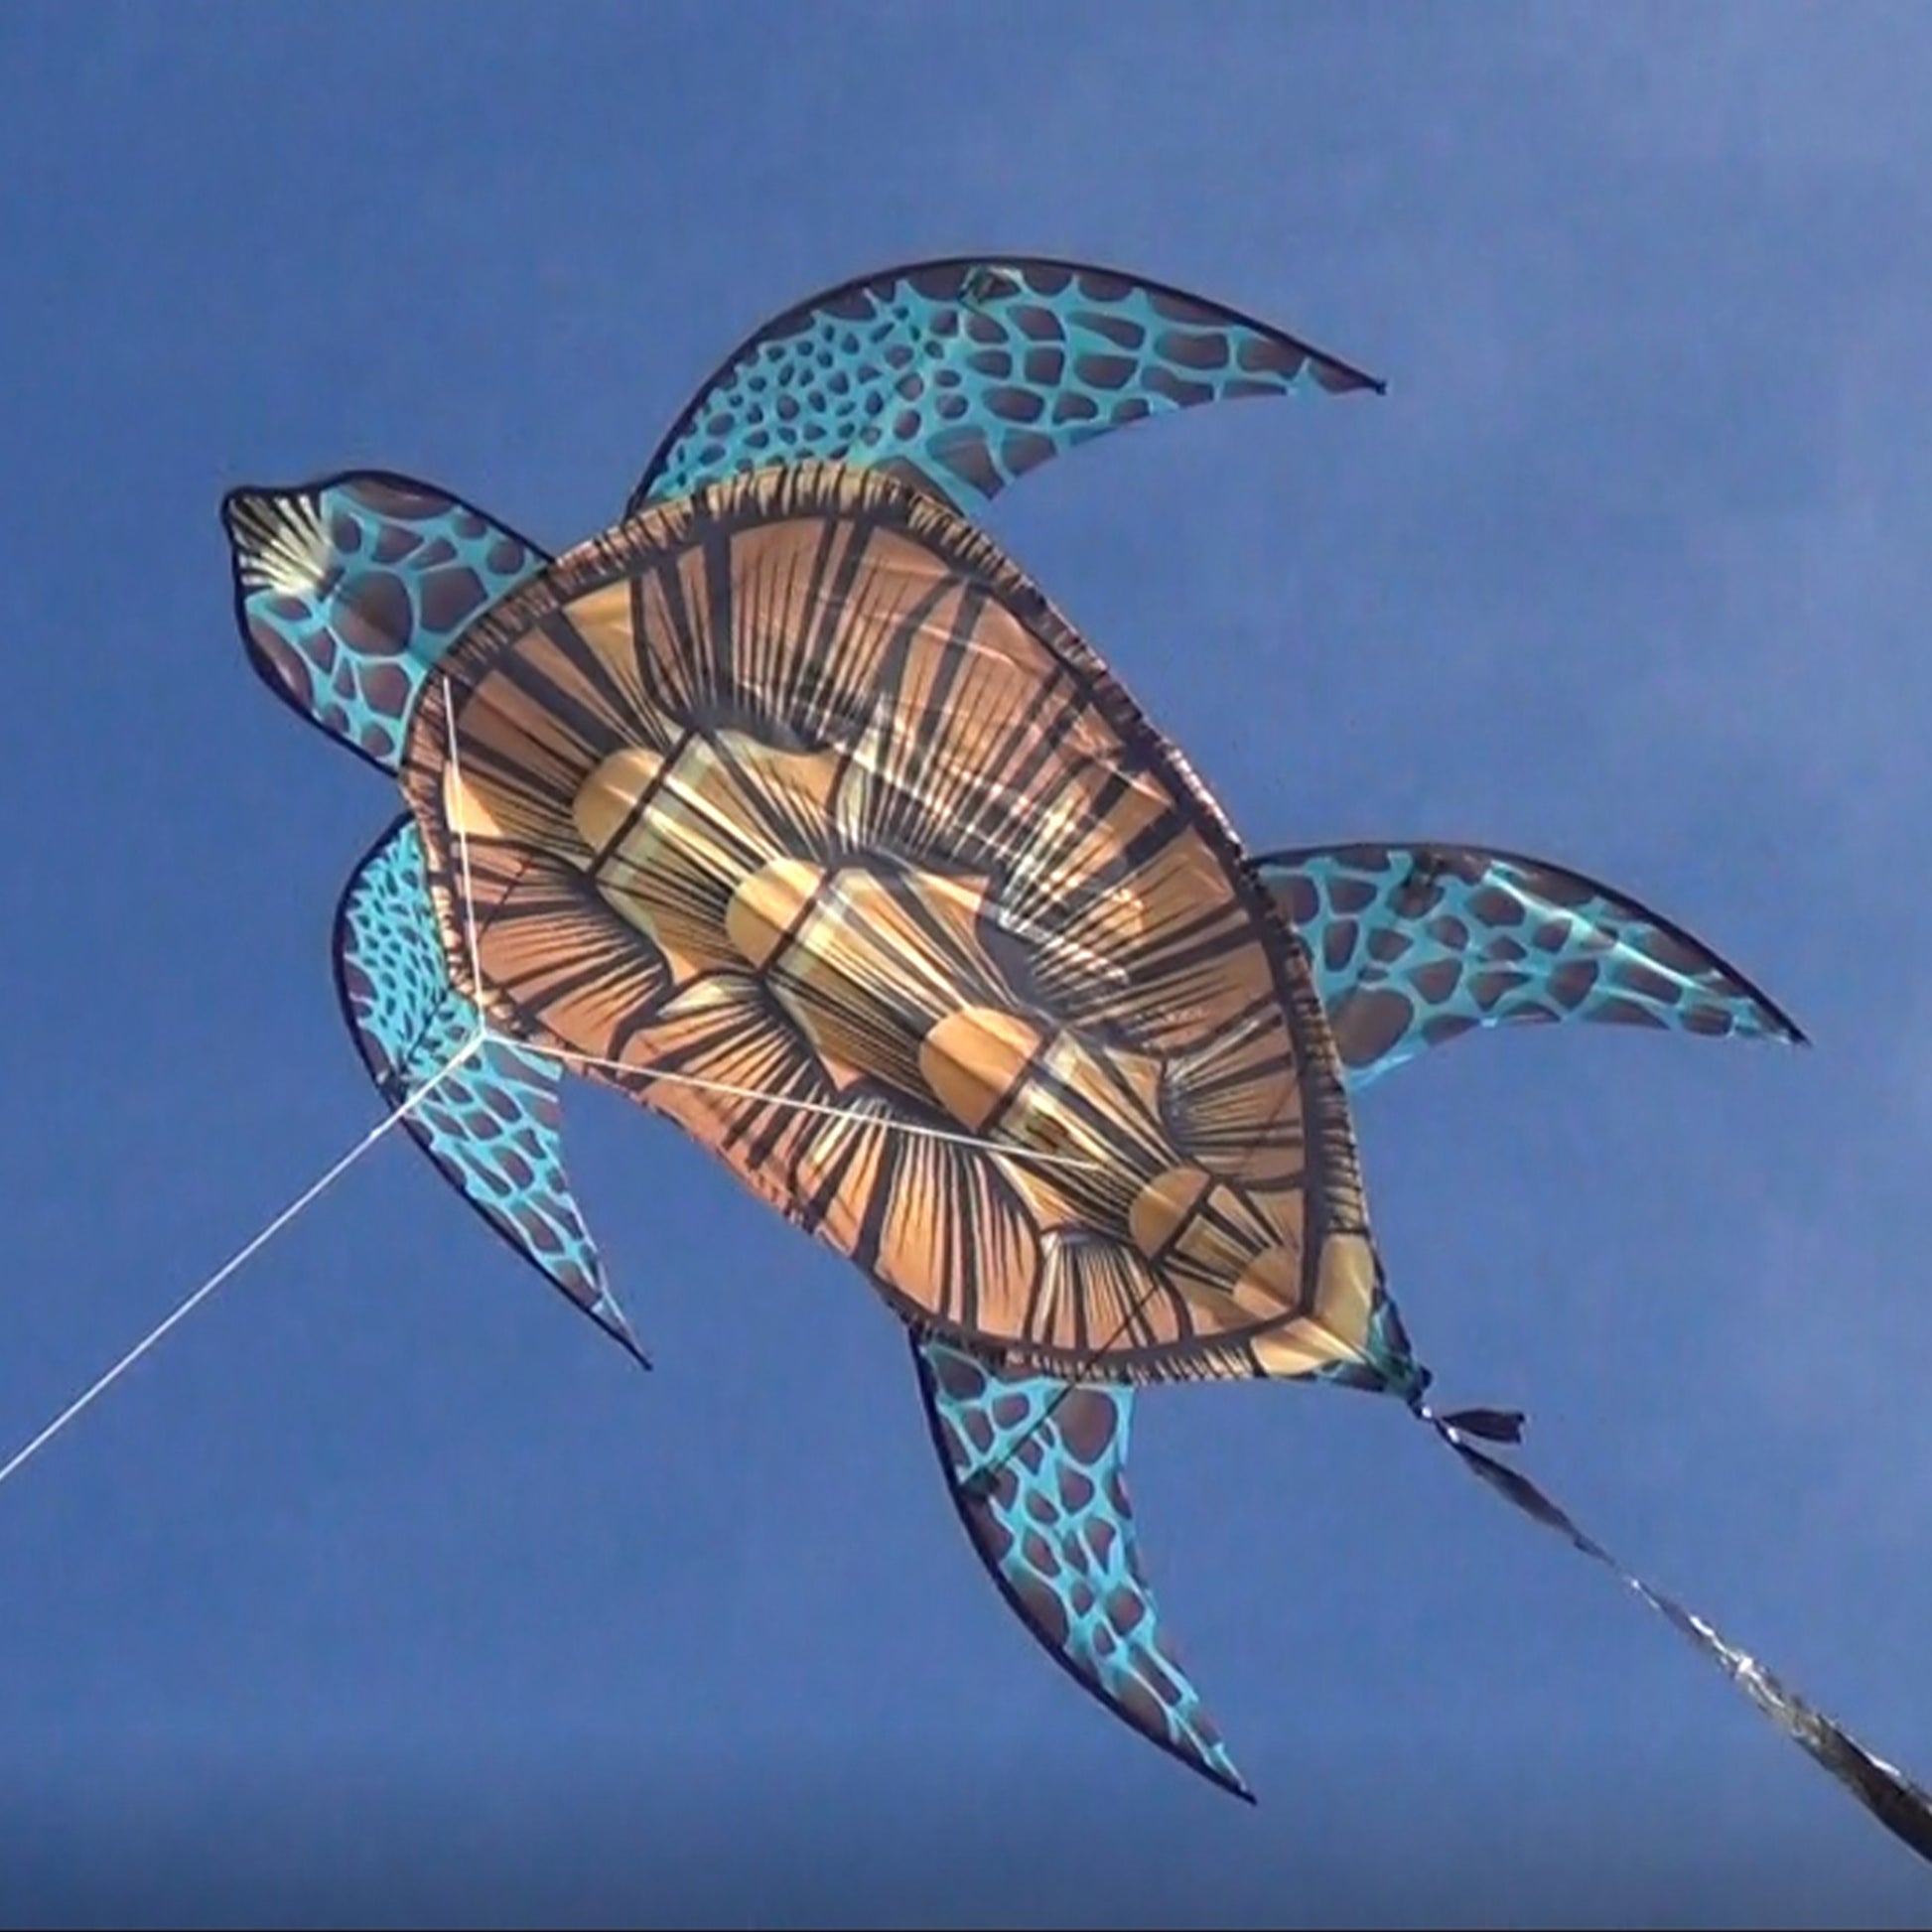 windnsun sealife seaturtle nylon kite flying